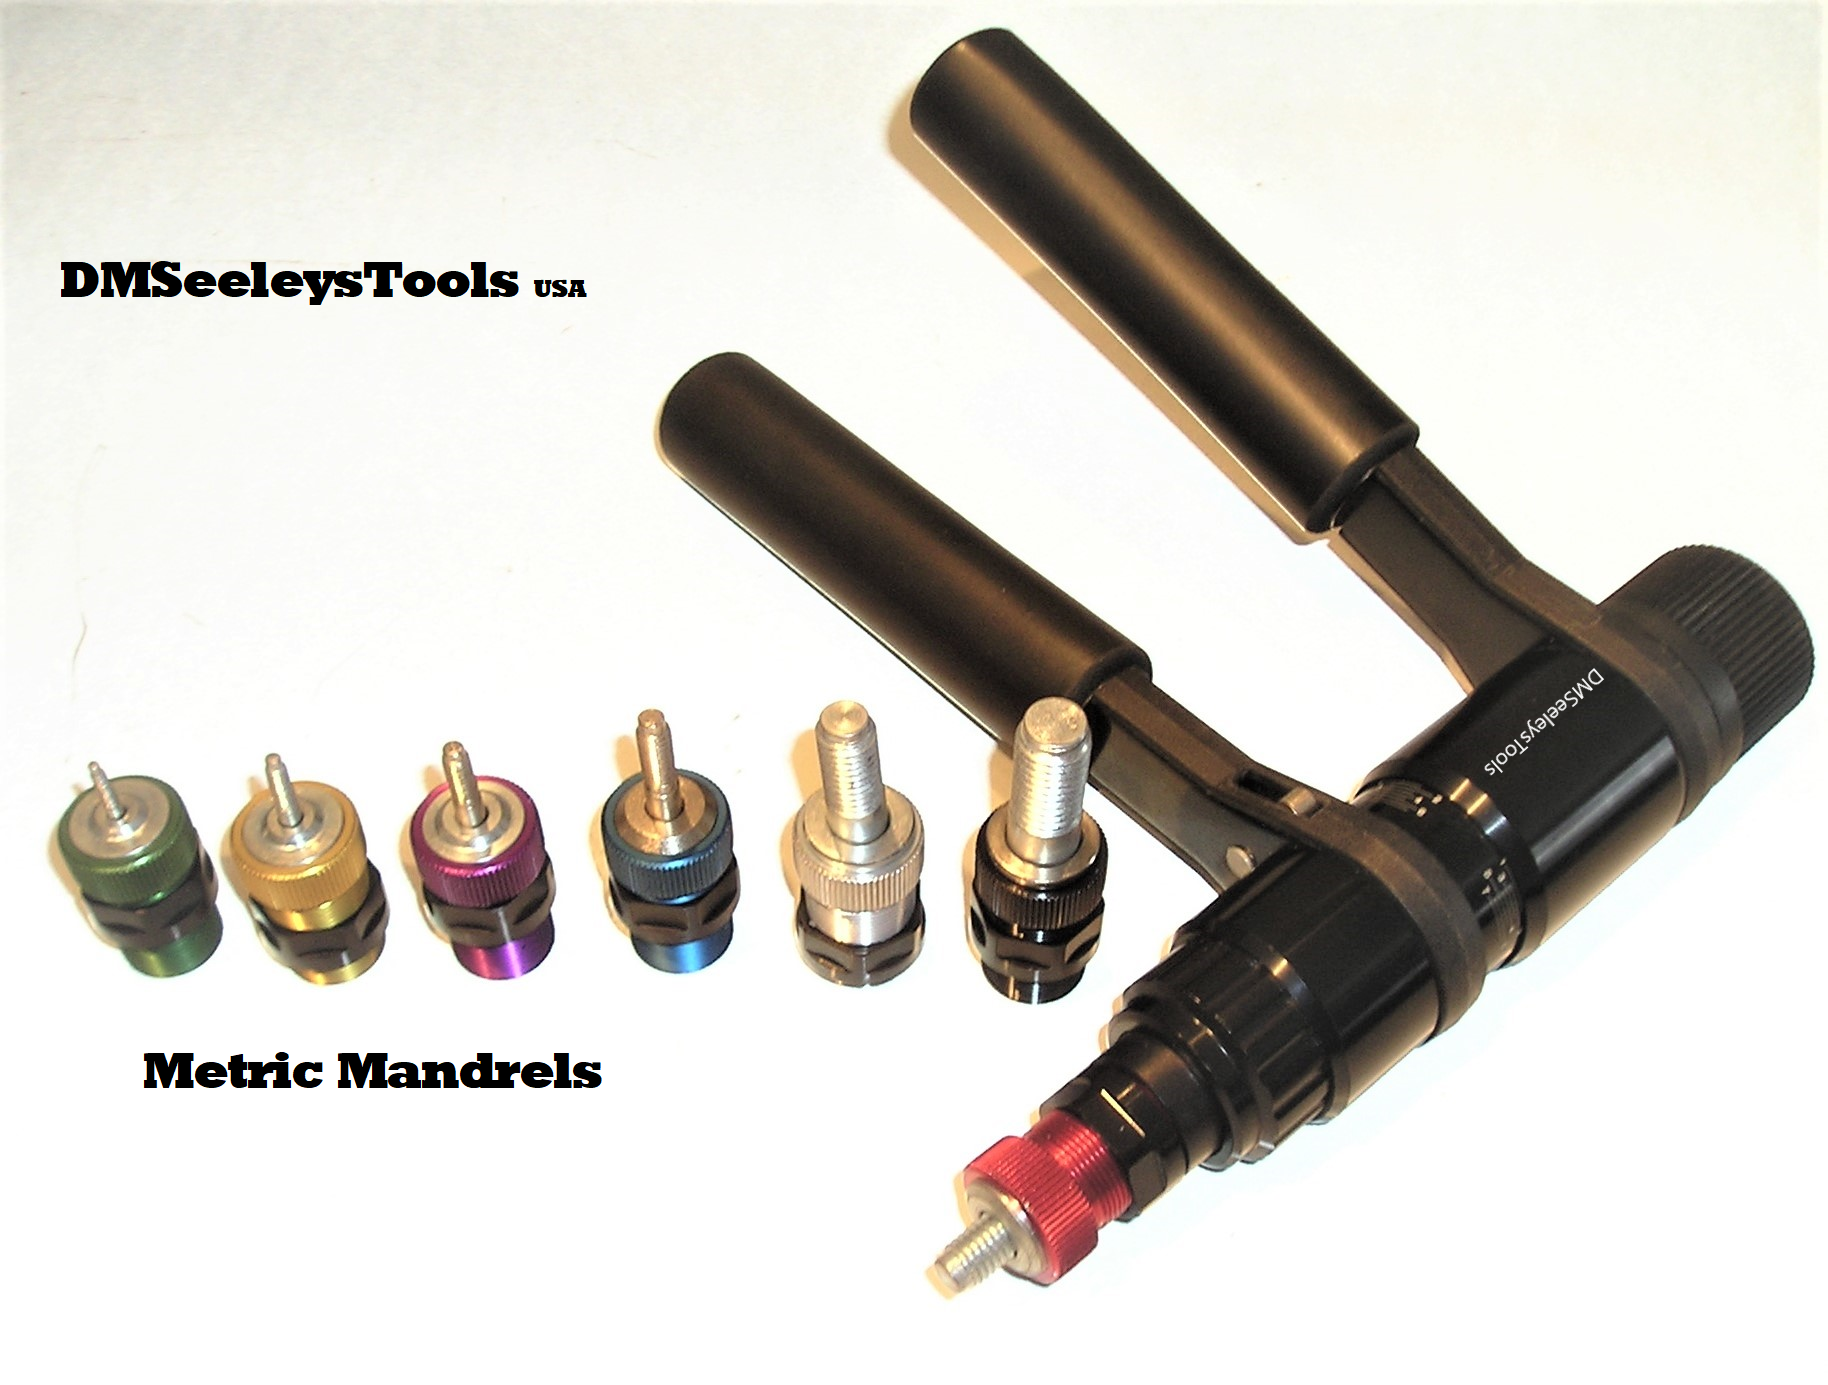 Rivet Nut Ratchet Kit with Metric Mandrels M4,M5,M6,M8,M10,M12, Riveters/ Rivet Guns, Rivet Tools, Tools